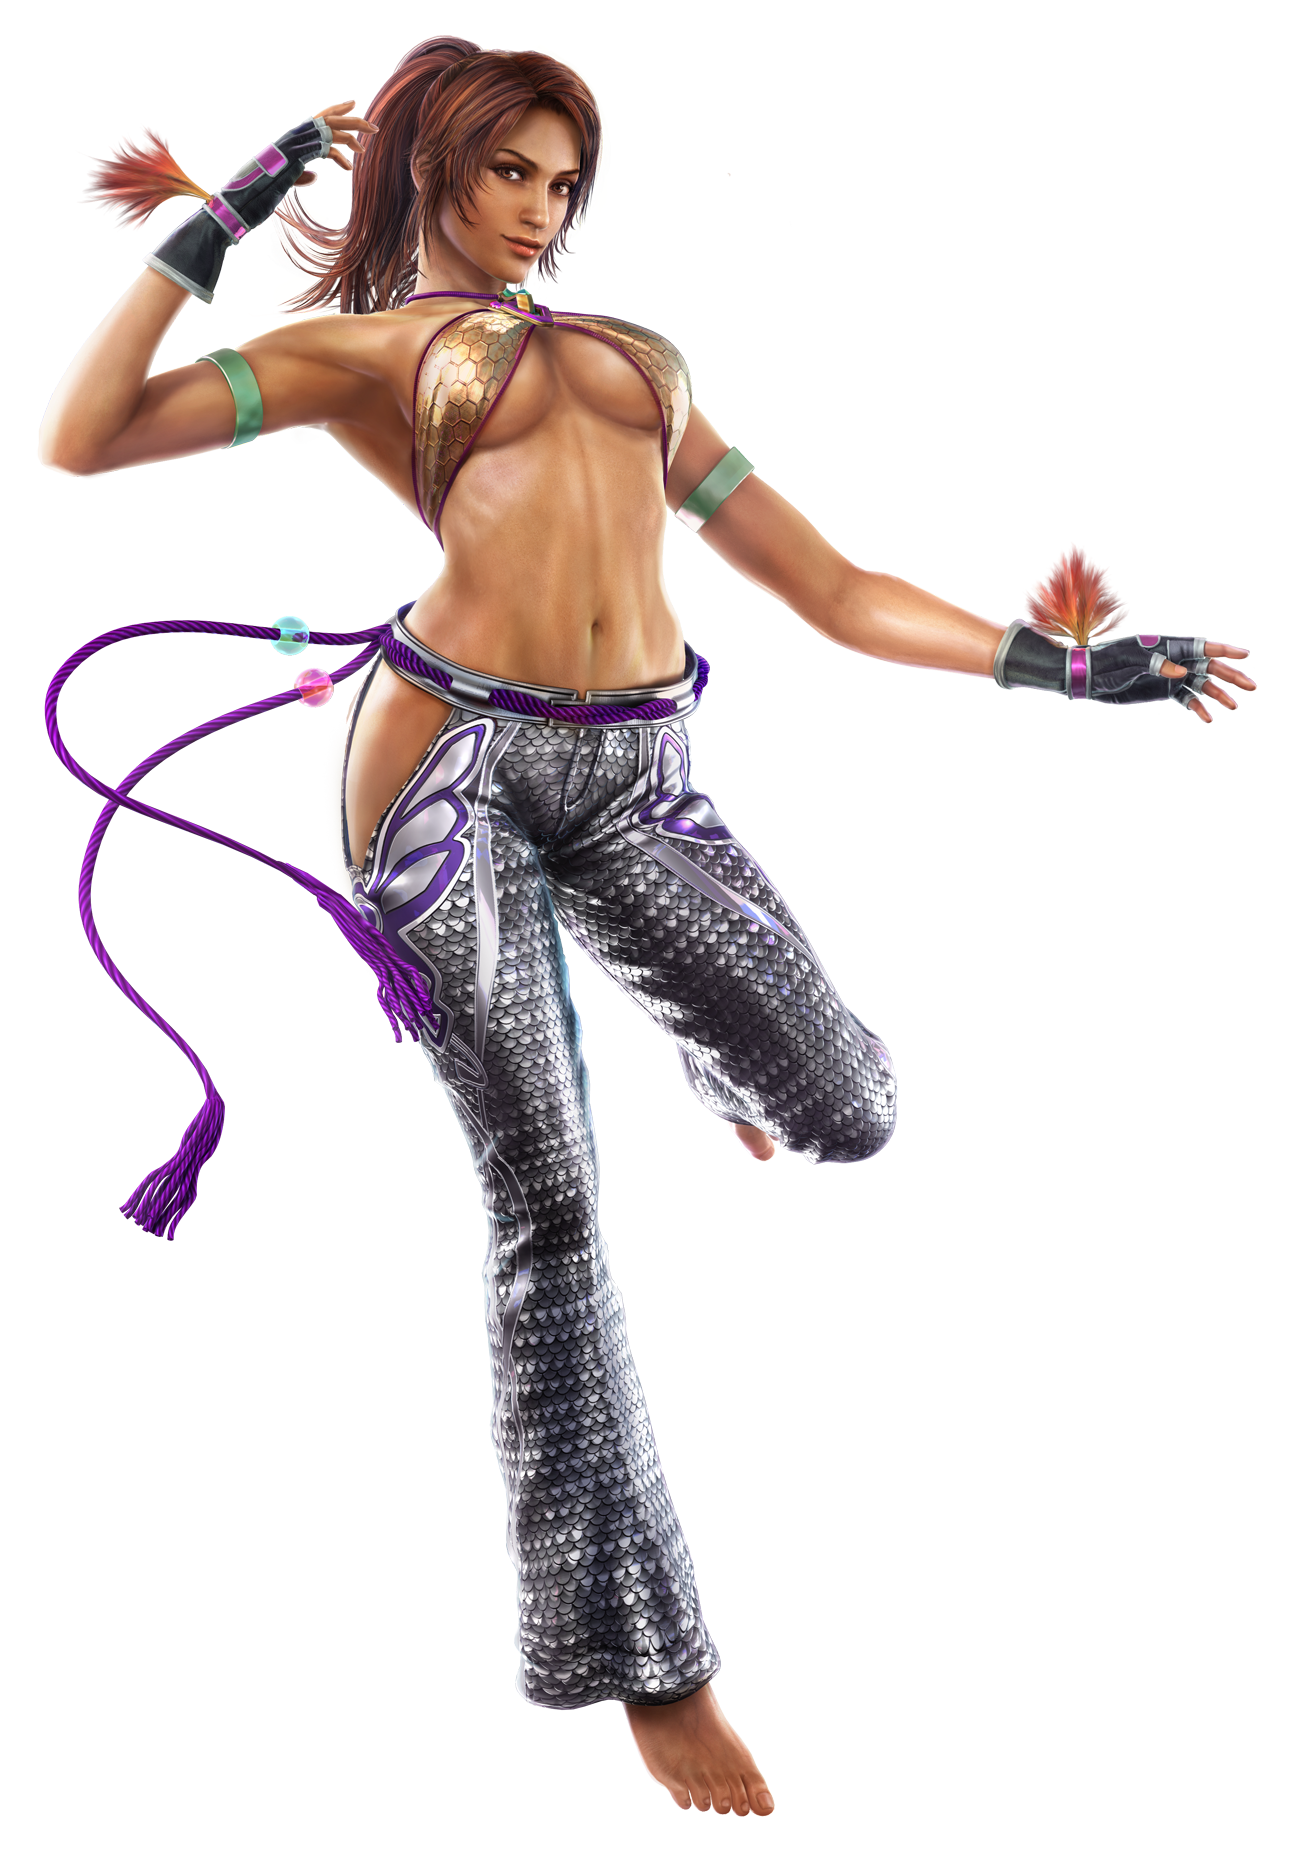 Female Tekken Characters : 'make a list of the hottest tekken female c...